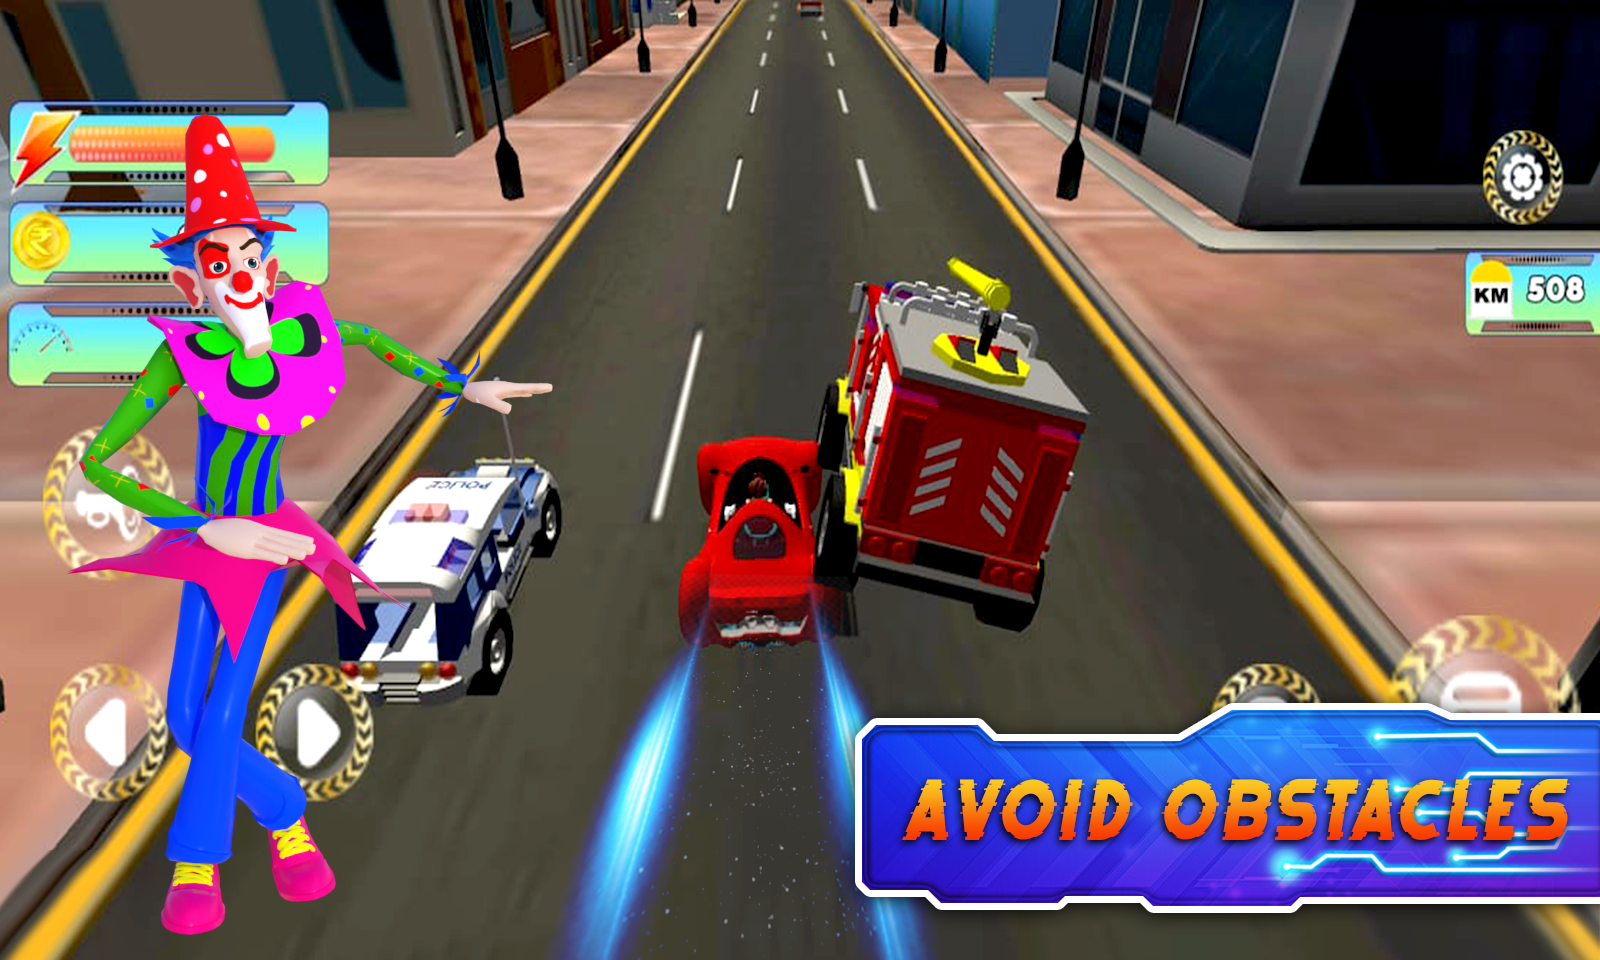 Kicko & Super Speedo Car Game screenshot game